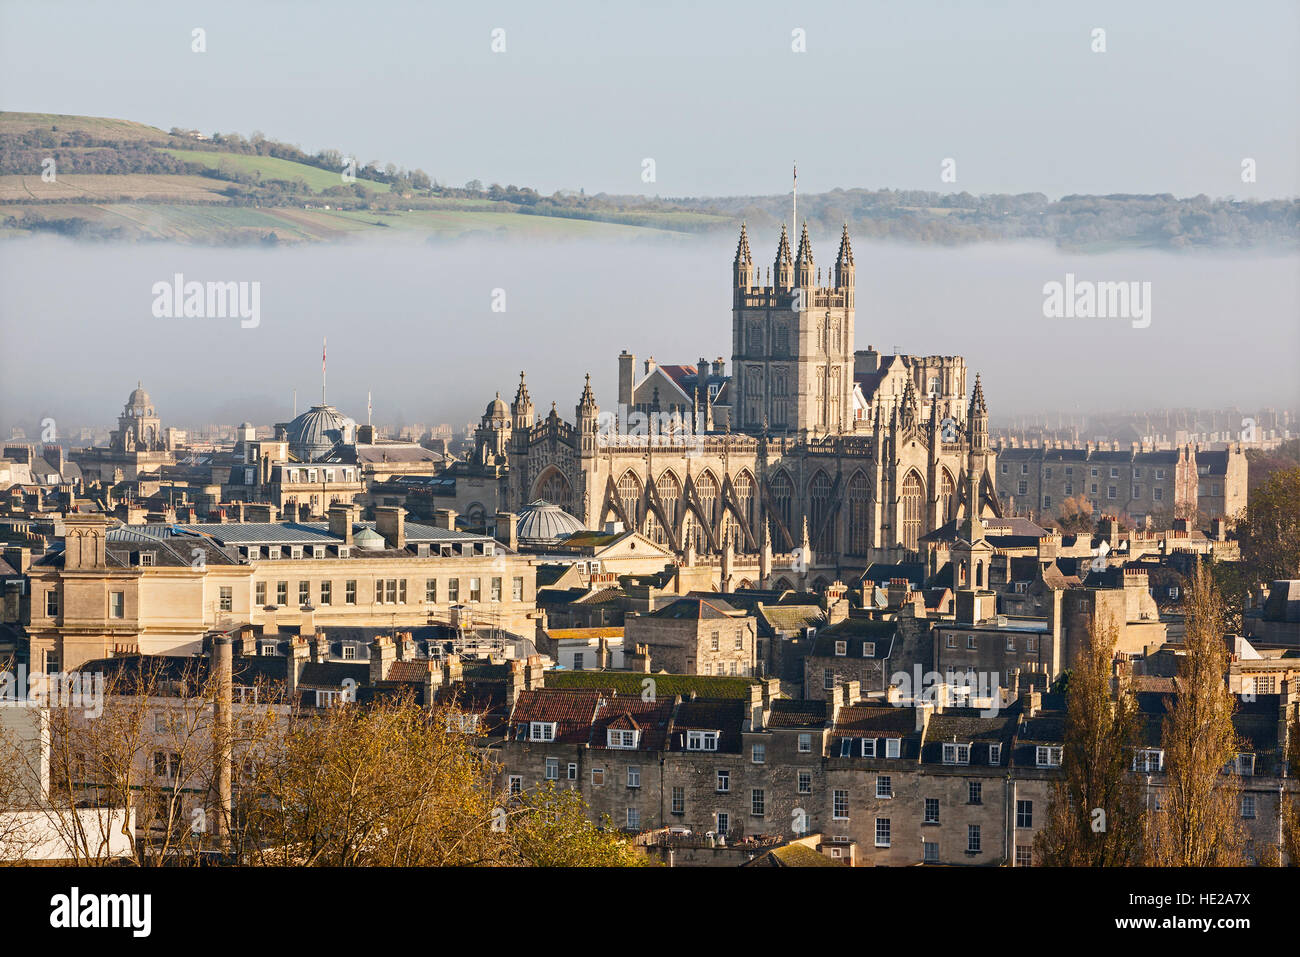 The historic city of Bath shrouded in mist on an autumn morning Stock Photo